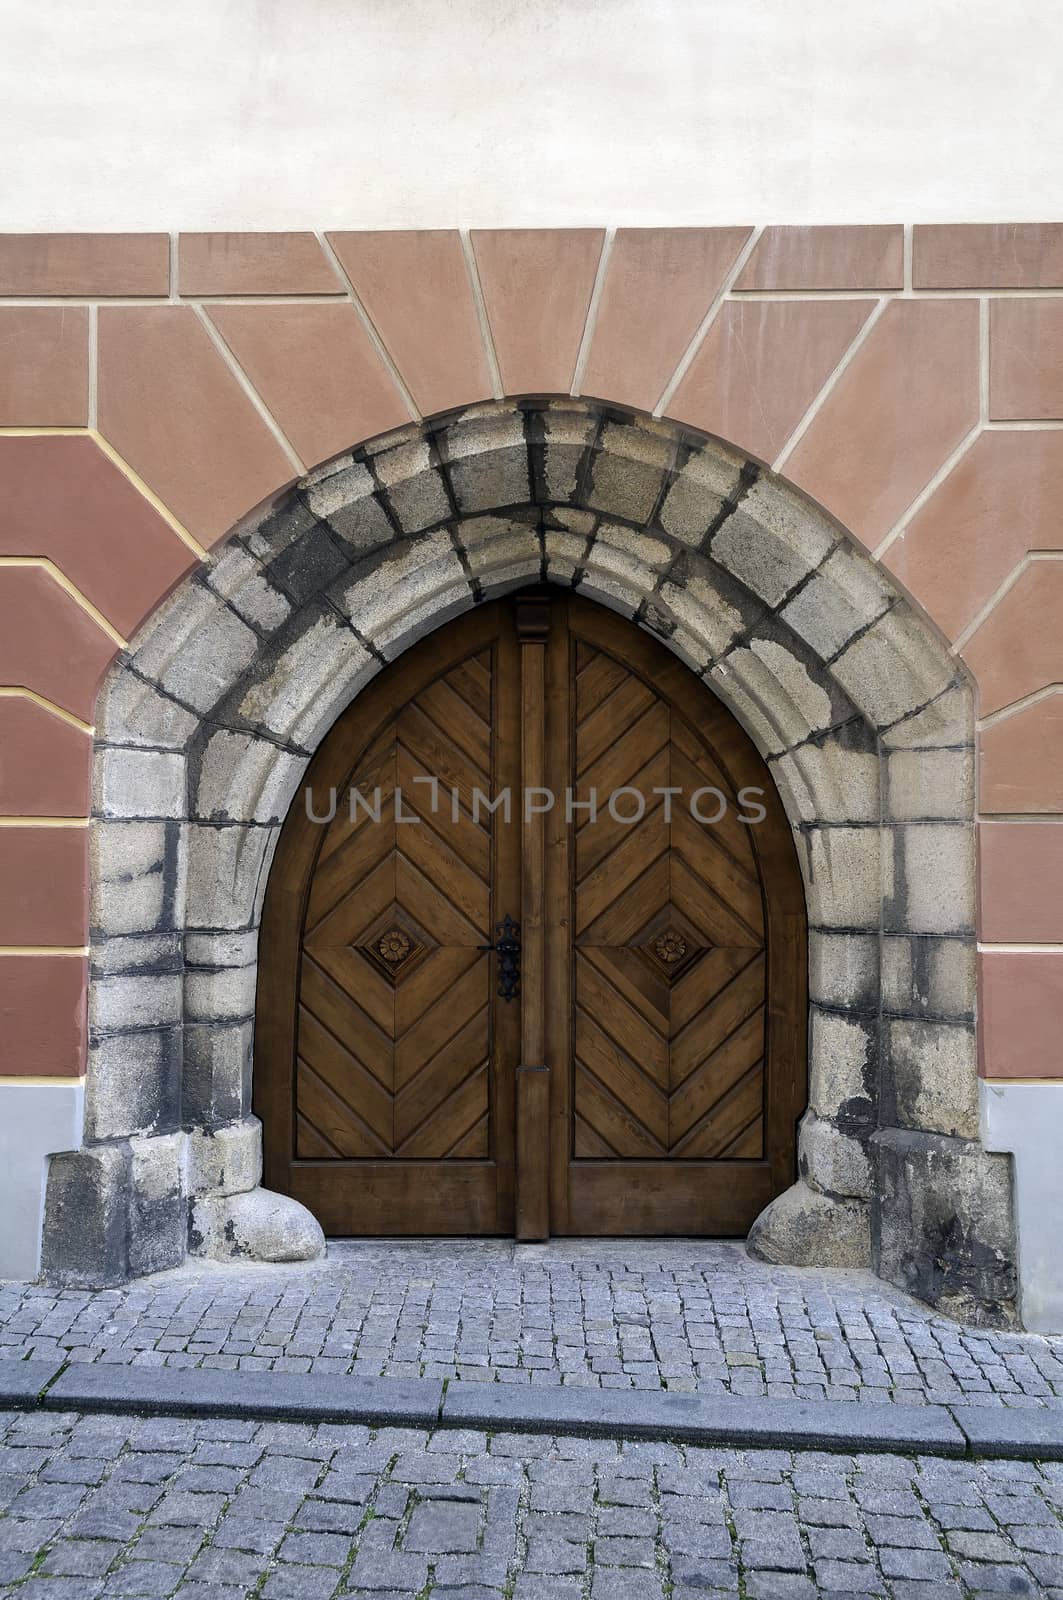 Gothic style, wooden door in european medieval town.